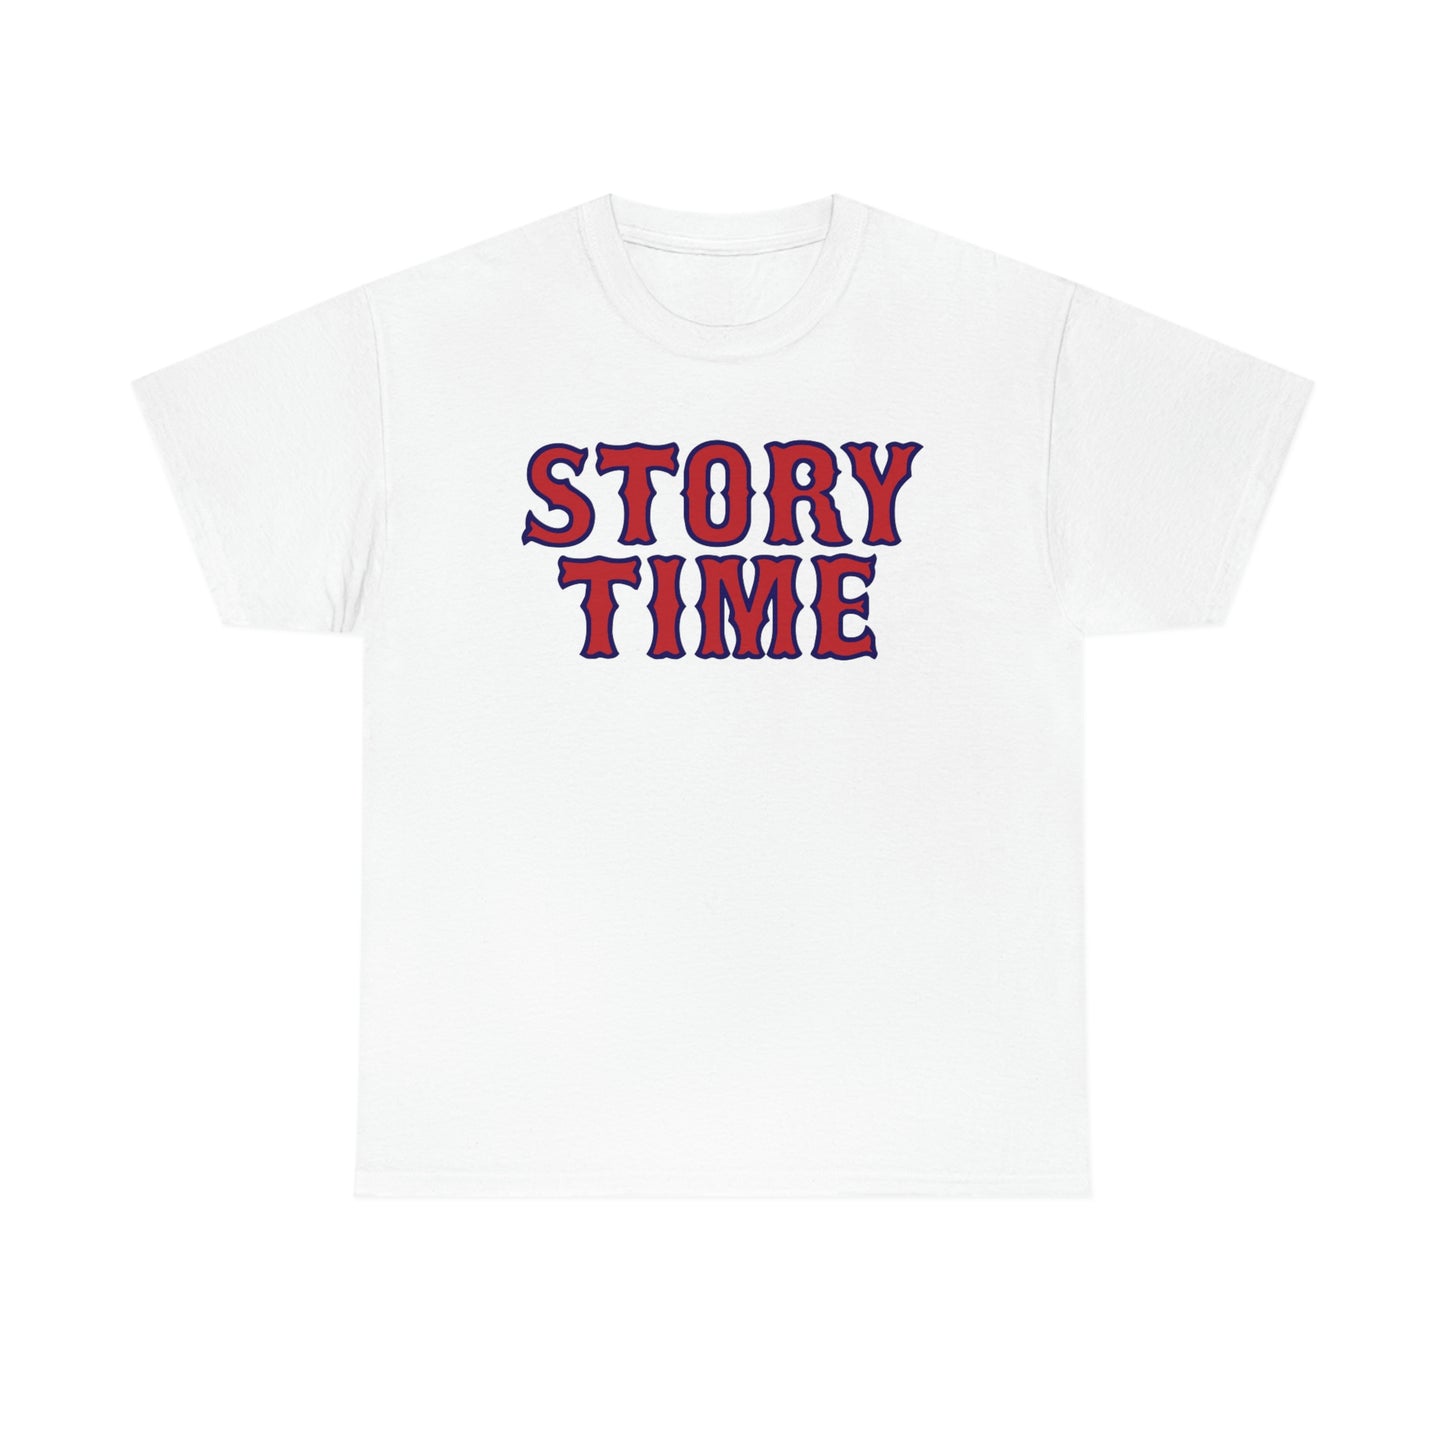 Trevor Story "Story Time" T-Shirt